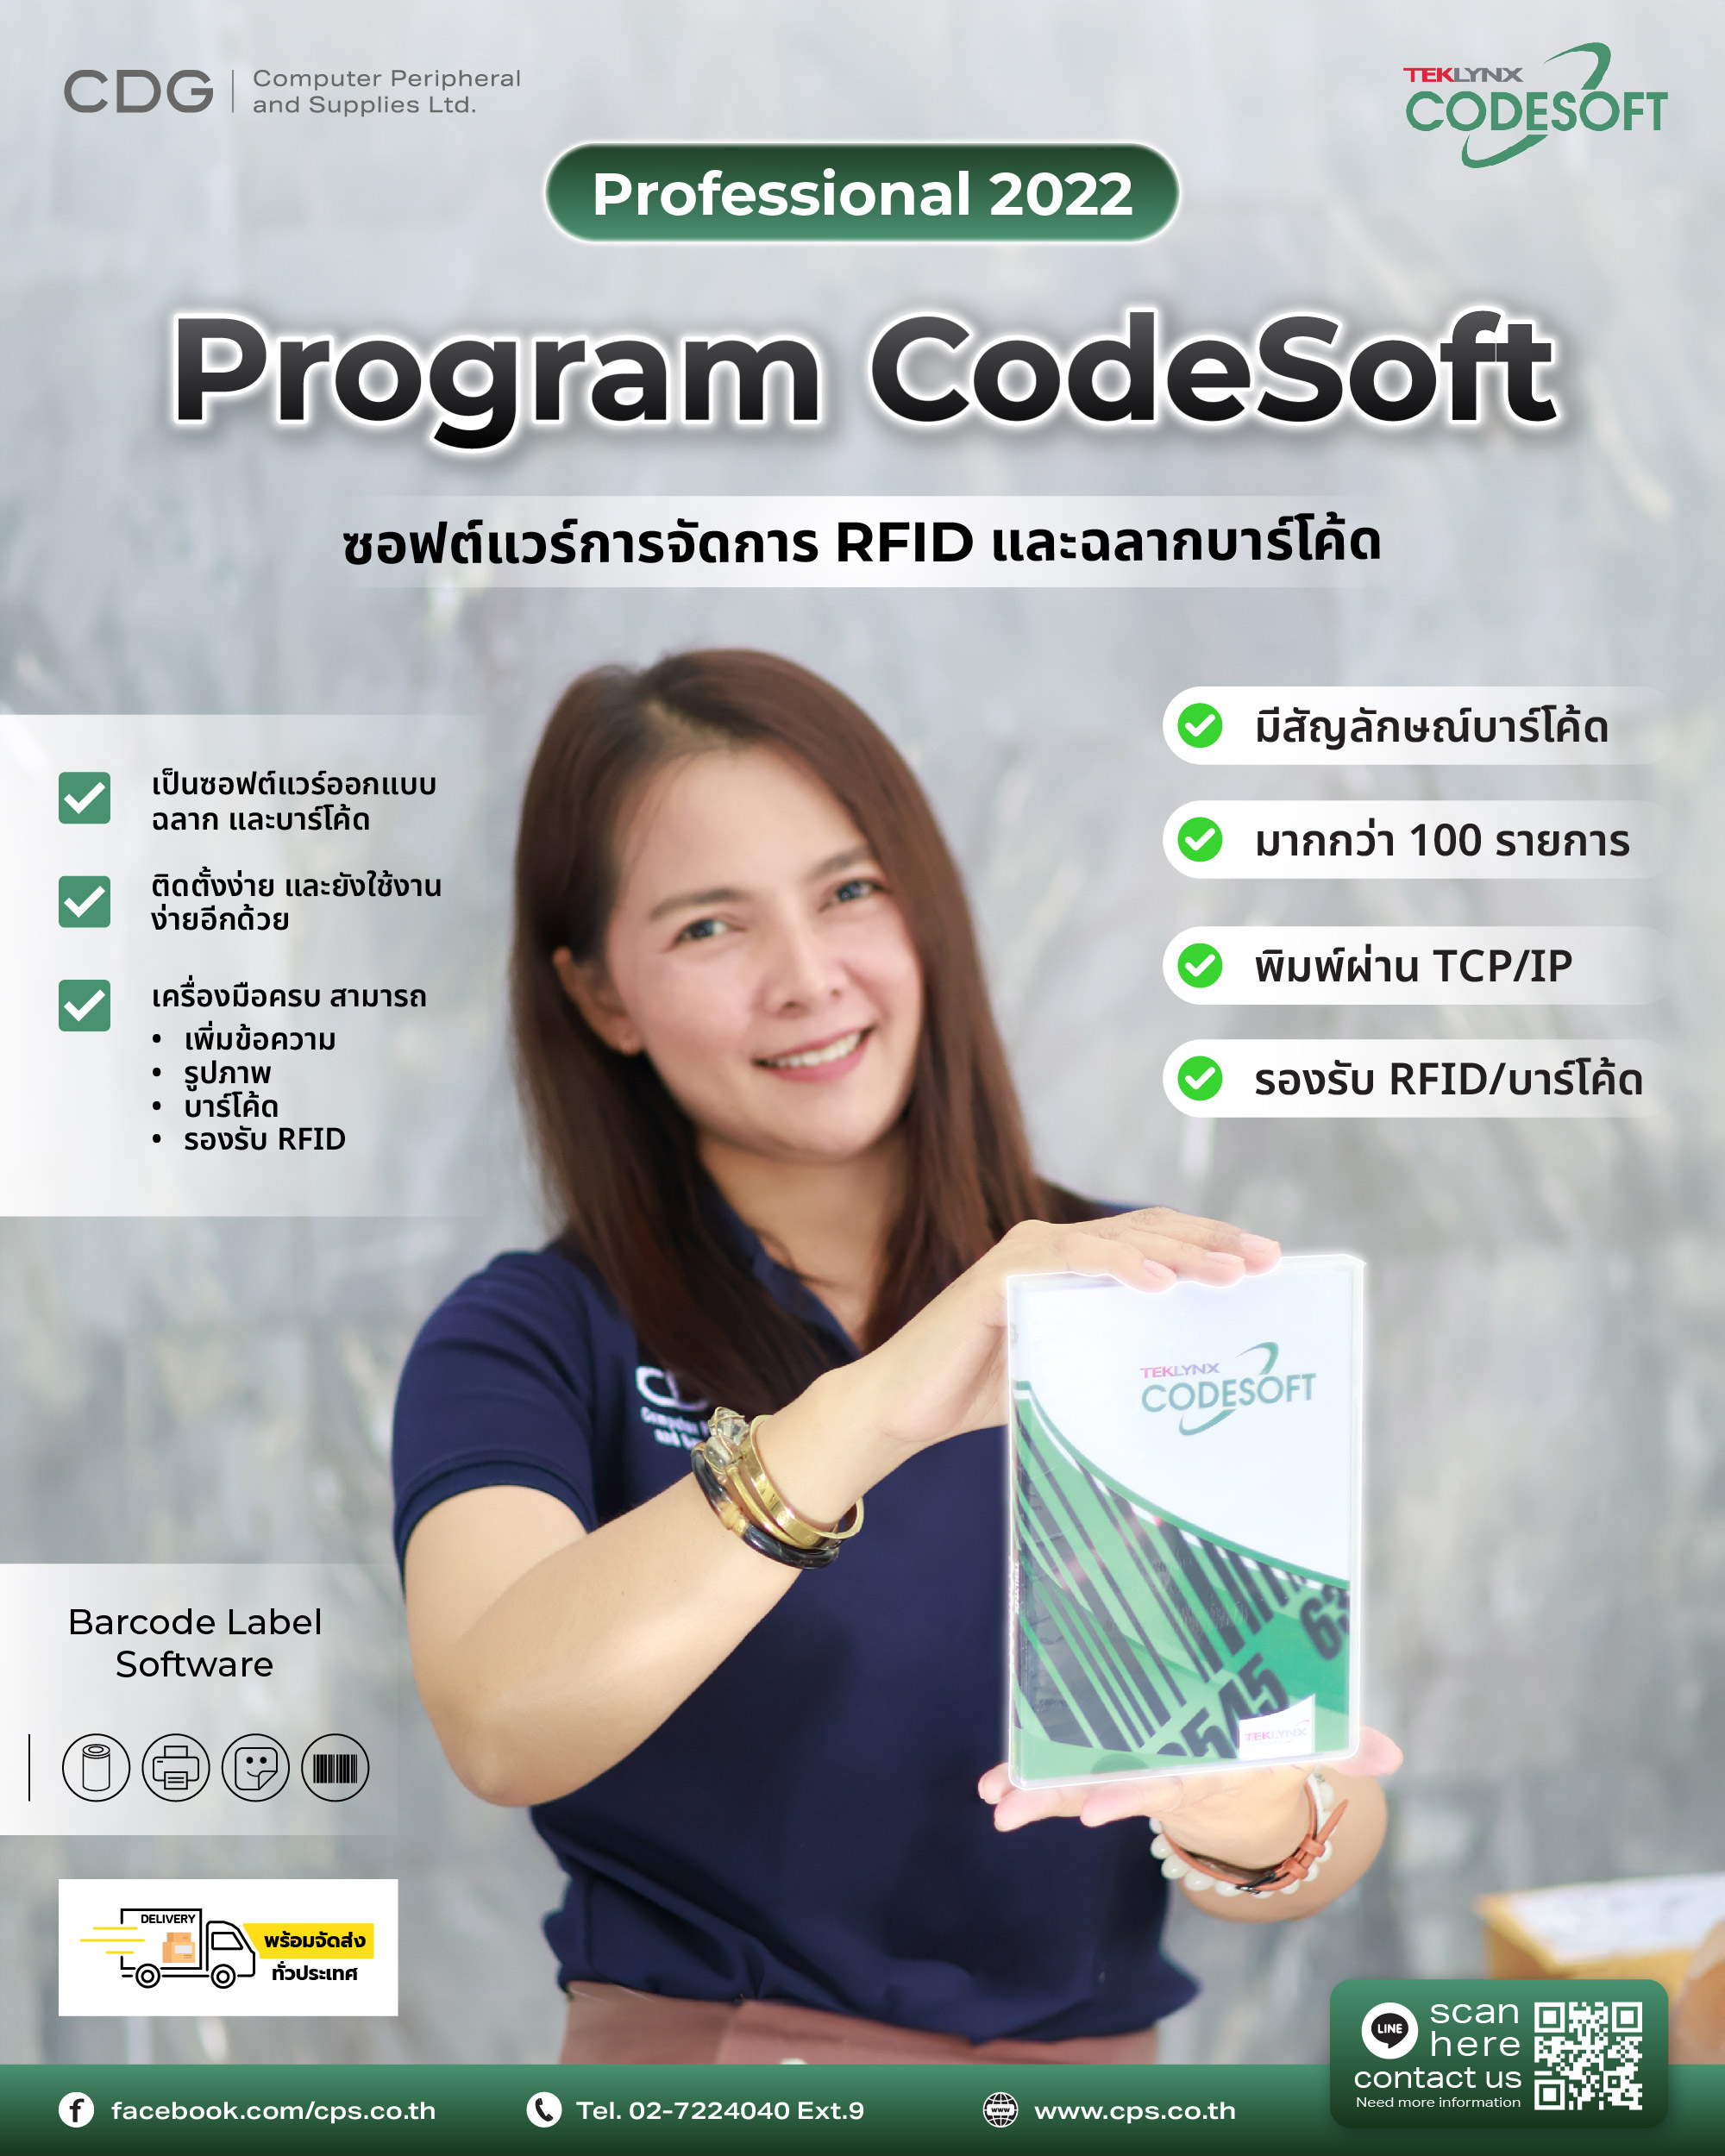 Program CodeSoft Professional 2022